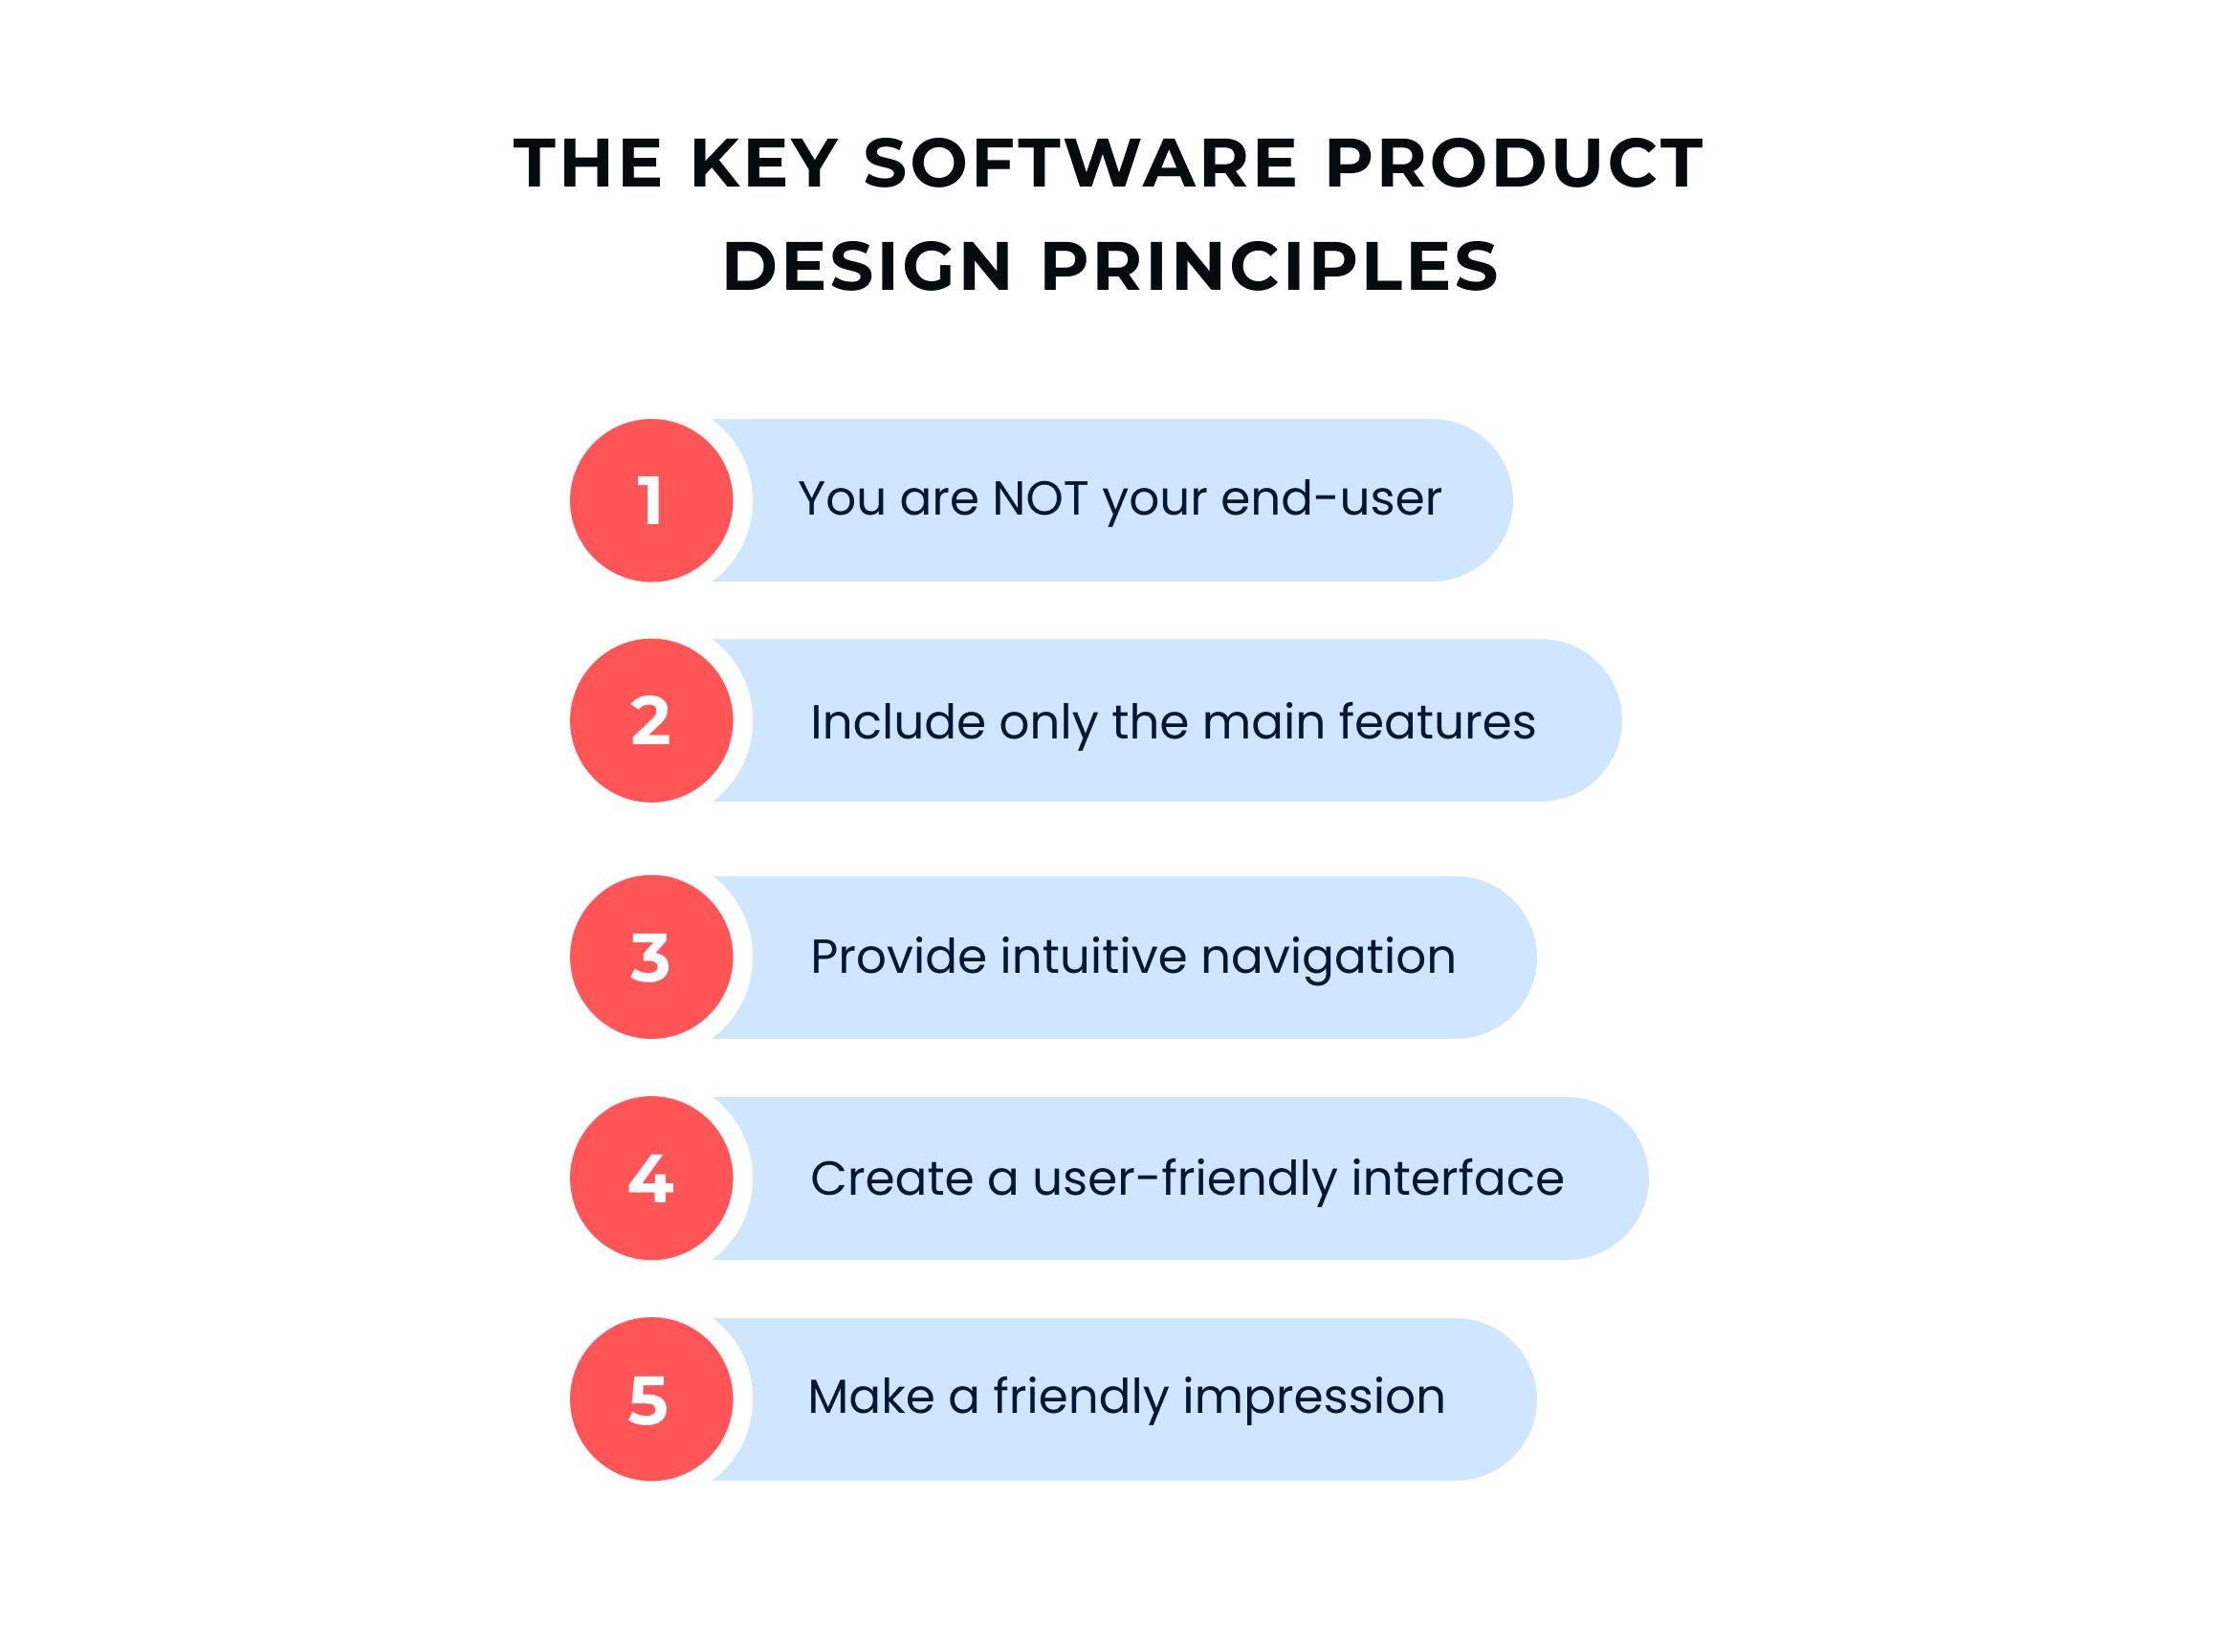 Software product design principles